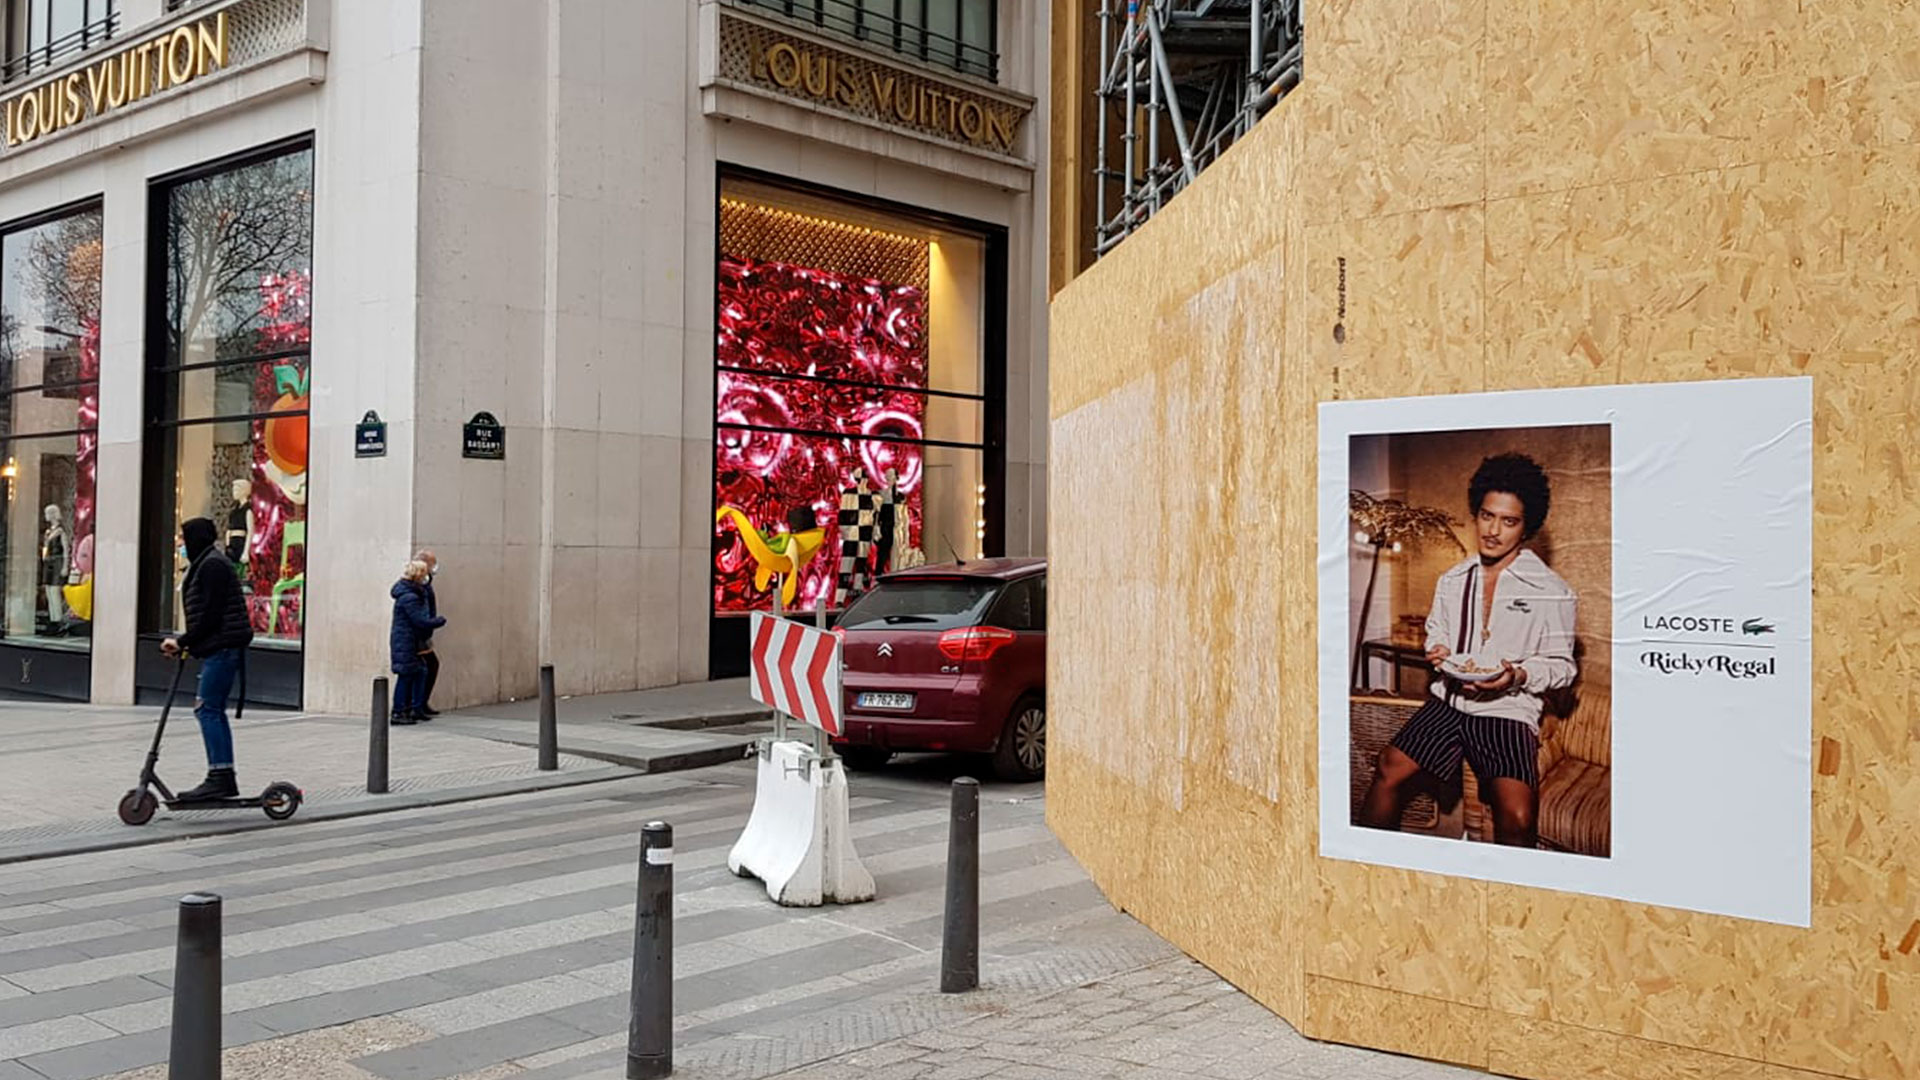 lacoste-et-ricky-regal-mode-campagne-stickering-affichage-urbain-paris-tapage-medias